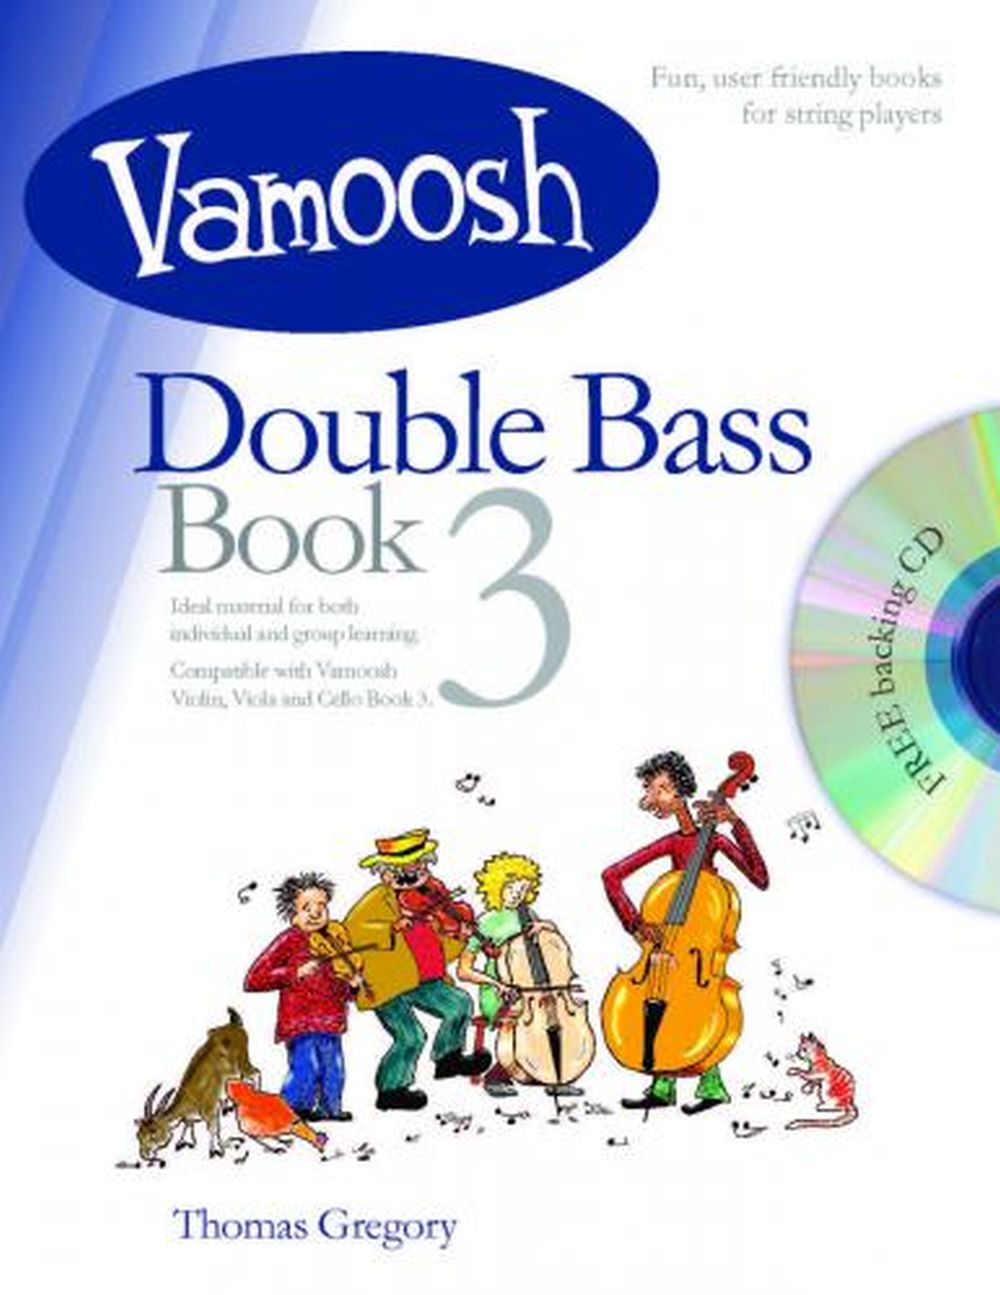 Thomas Gregory: Vamoosh Double Bass Book 3: Double Bass: Instrumental Tutor